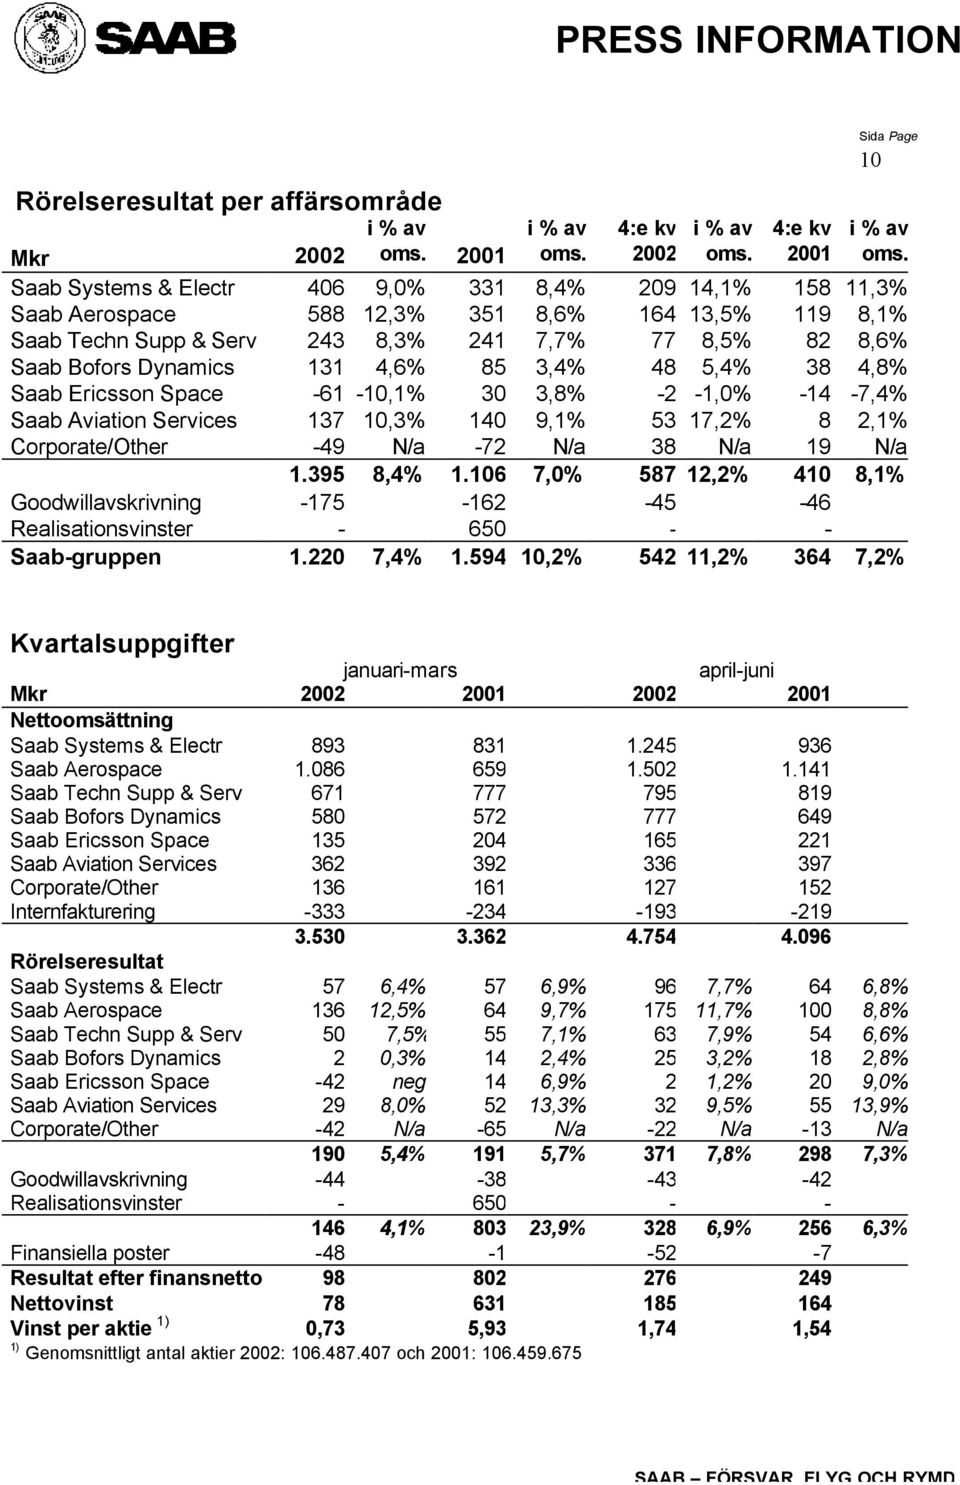 4,6% 85 3,4% 48 5,4% 38 4,8% Saab Ericsson Space -61-10,1% 30 3,8% -2-1,0% -14-7,4% Saab Aviation Services 137 10,3% 140 9,1% 53 17,2% 8 2,1% Corporate/Other -49 N/a -72 N/a 38 N/a 19 N/a 1.